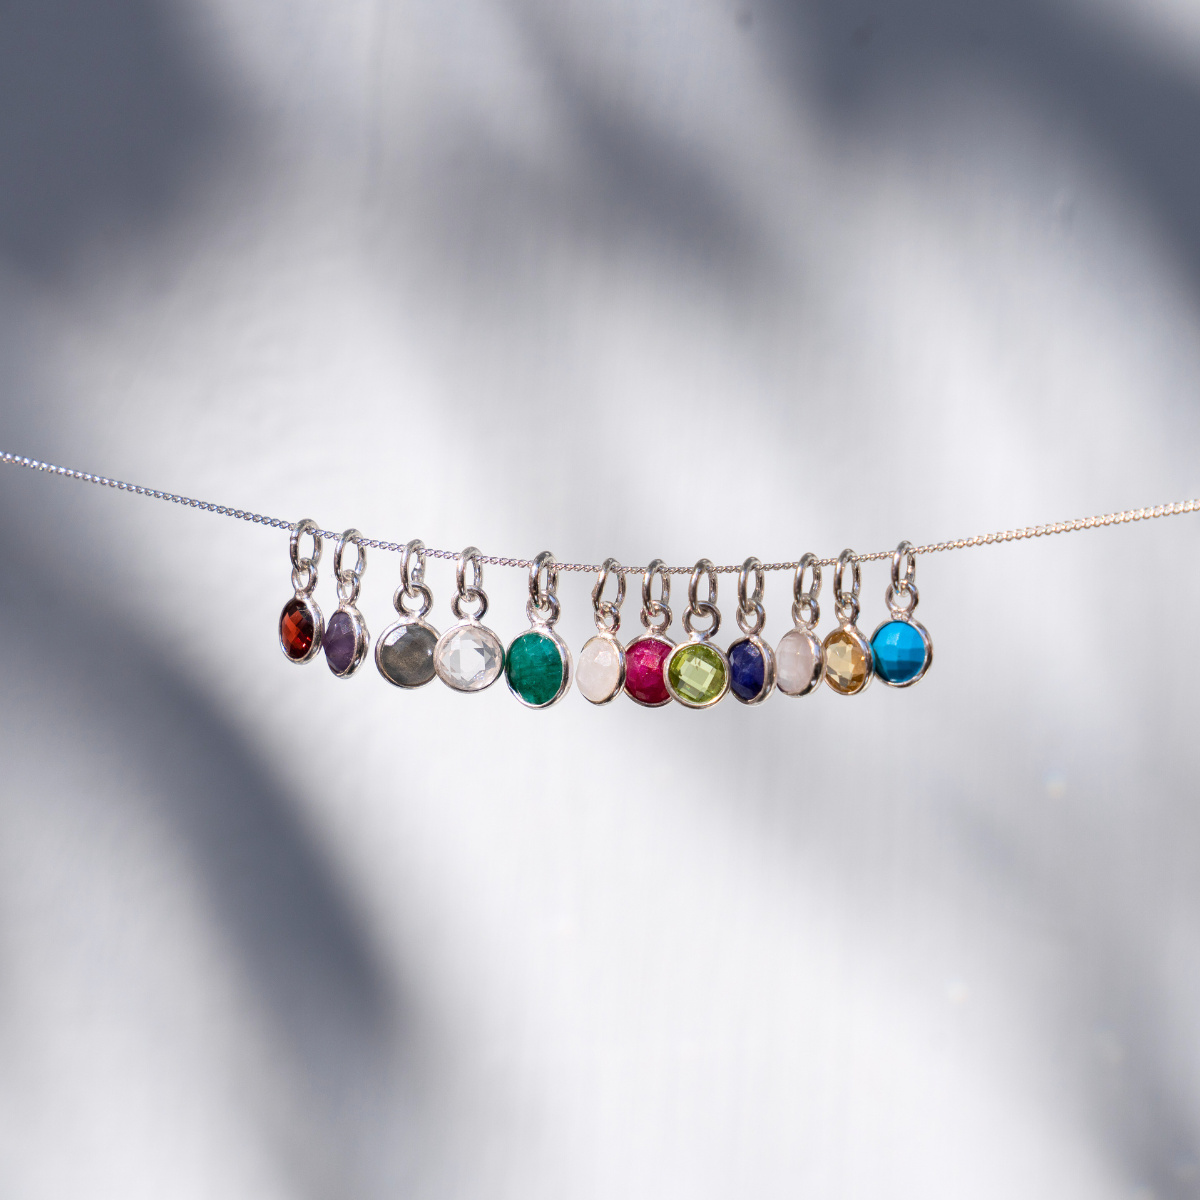 Birthstone charm necklaces